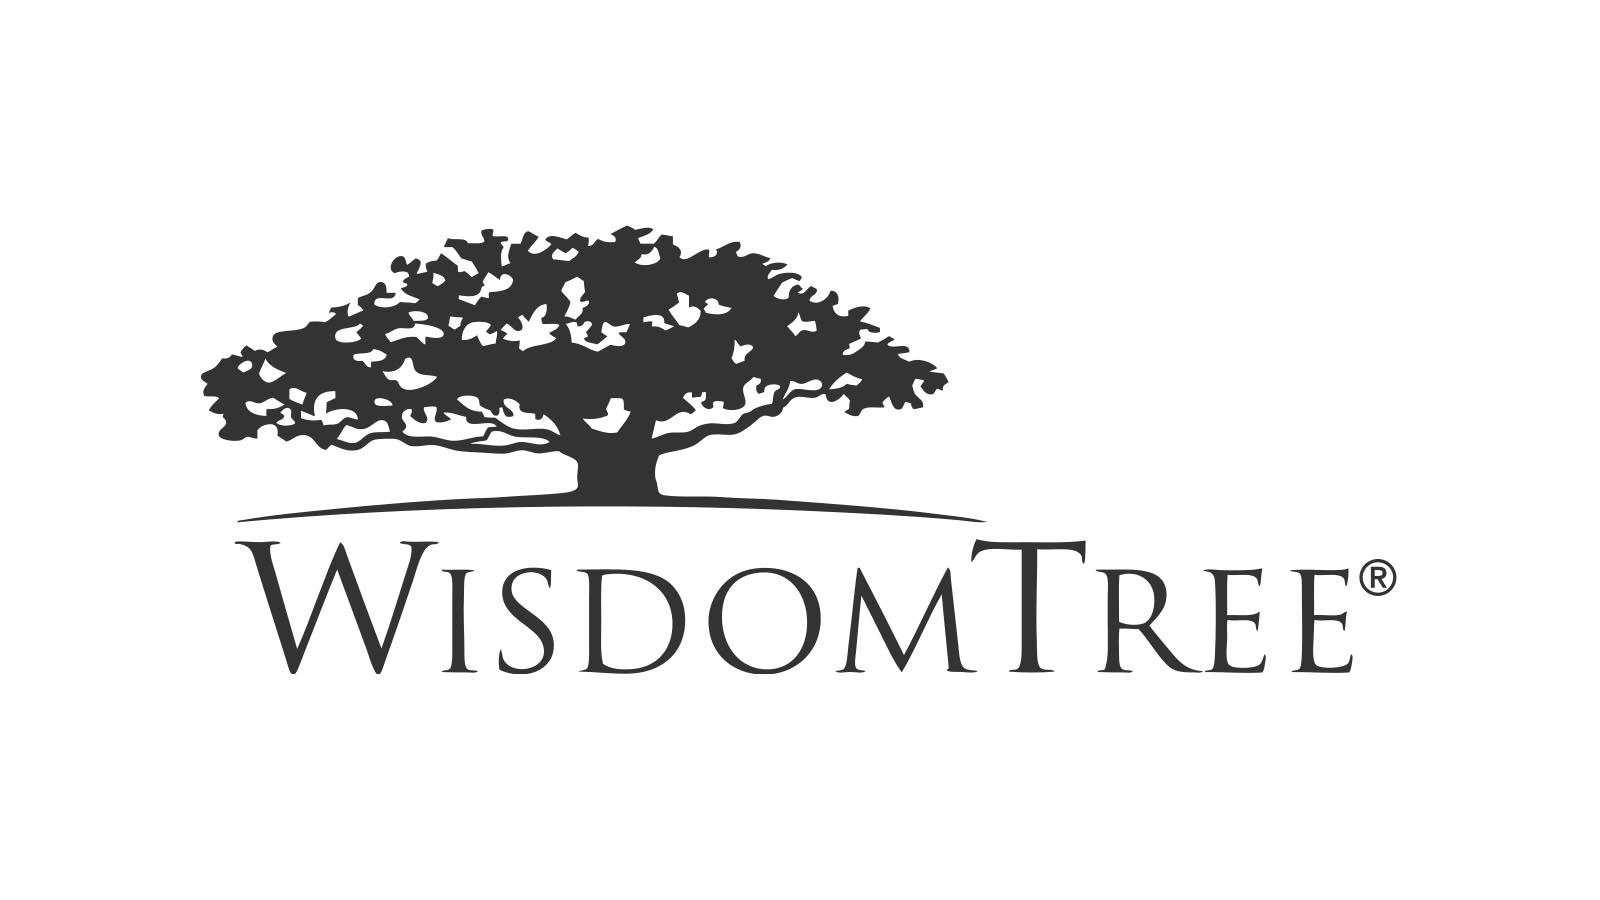 https://investorplace.com/wp-content/uploads/2019/07/wisdomtree_logo_wisdomtree1600.jpg